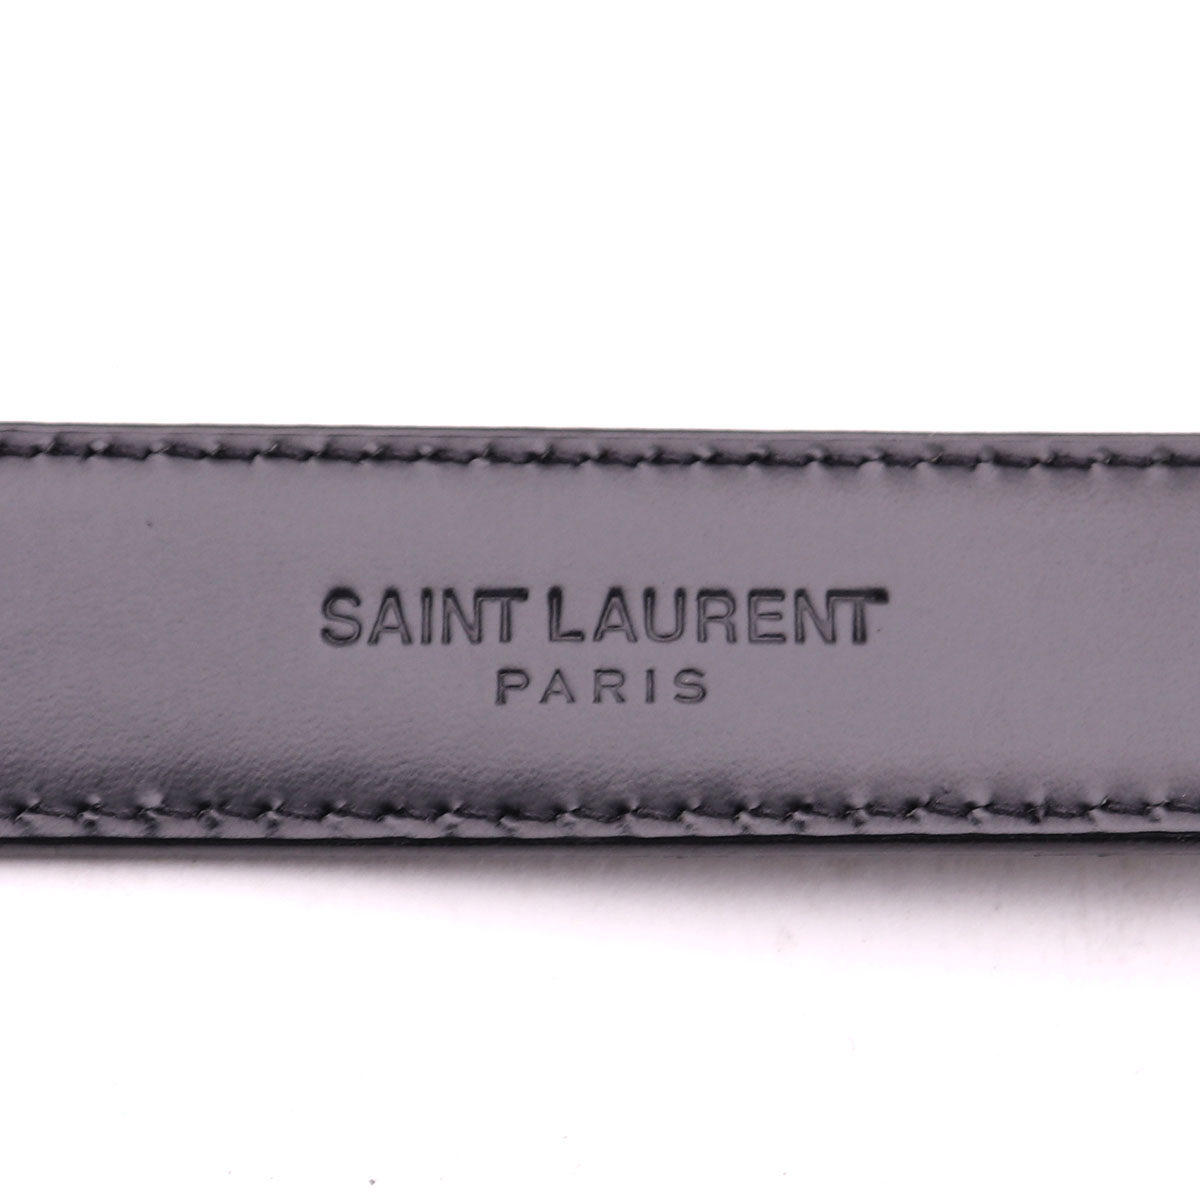 SAINT LAURENT PARISサンローラン買取しました！ 3連バックル